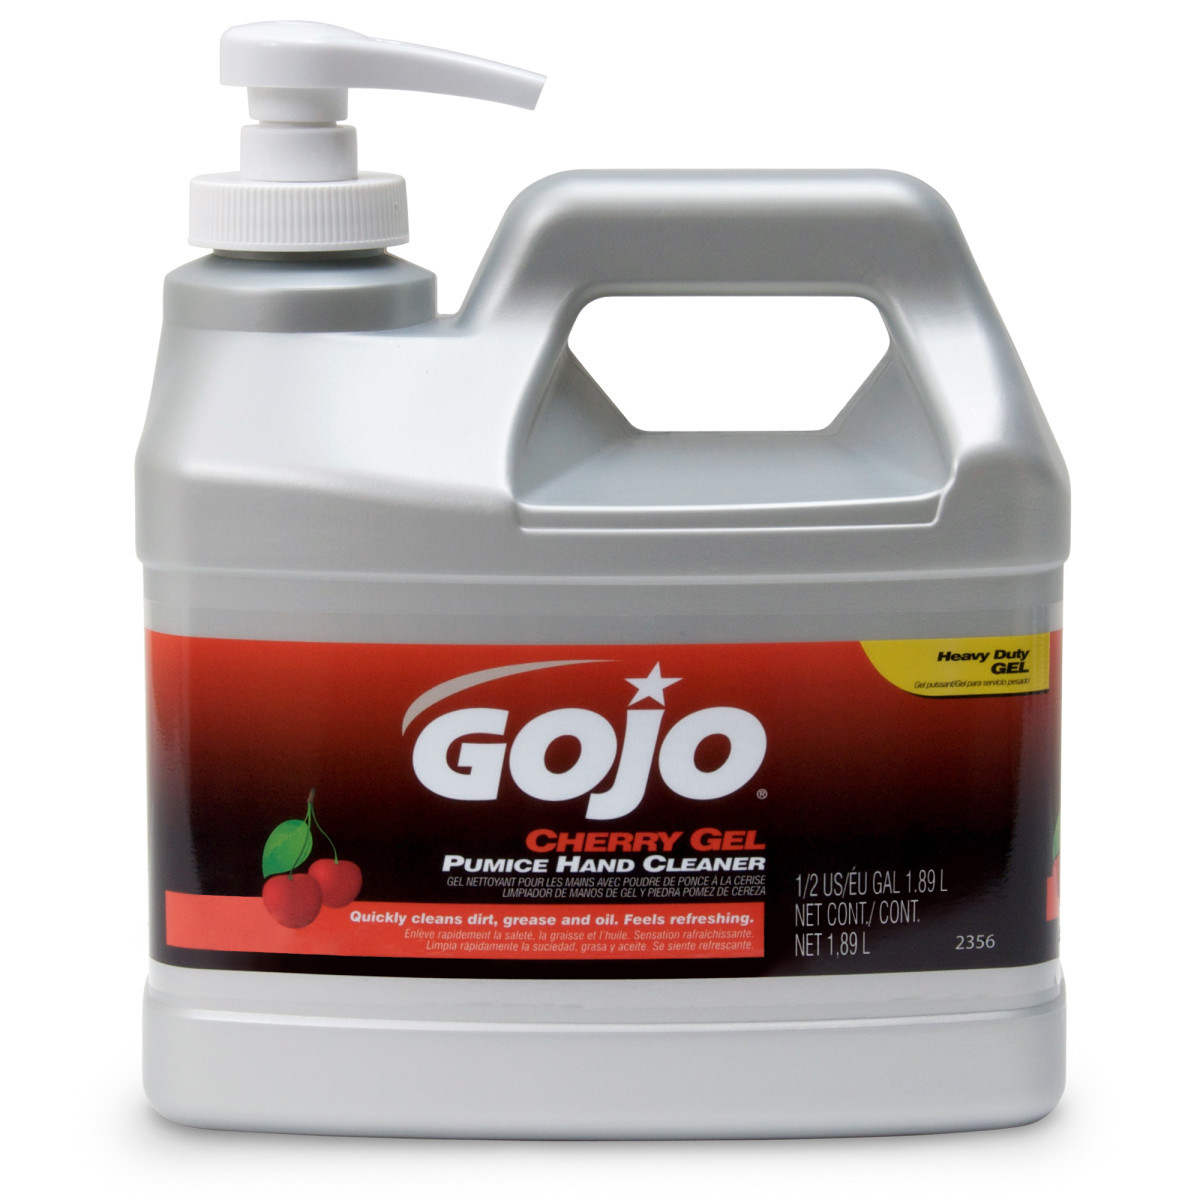 GOJO CLEANER SOAP - GAL